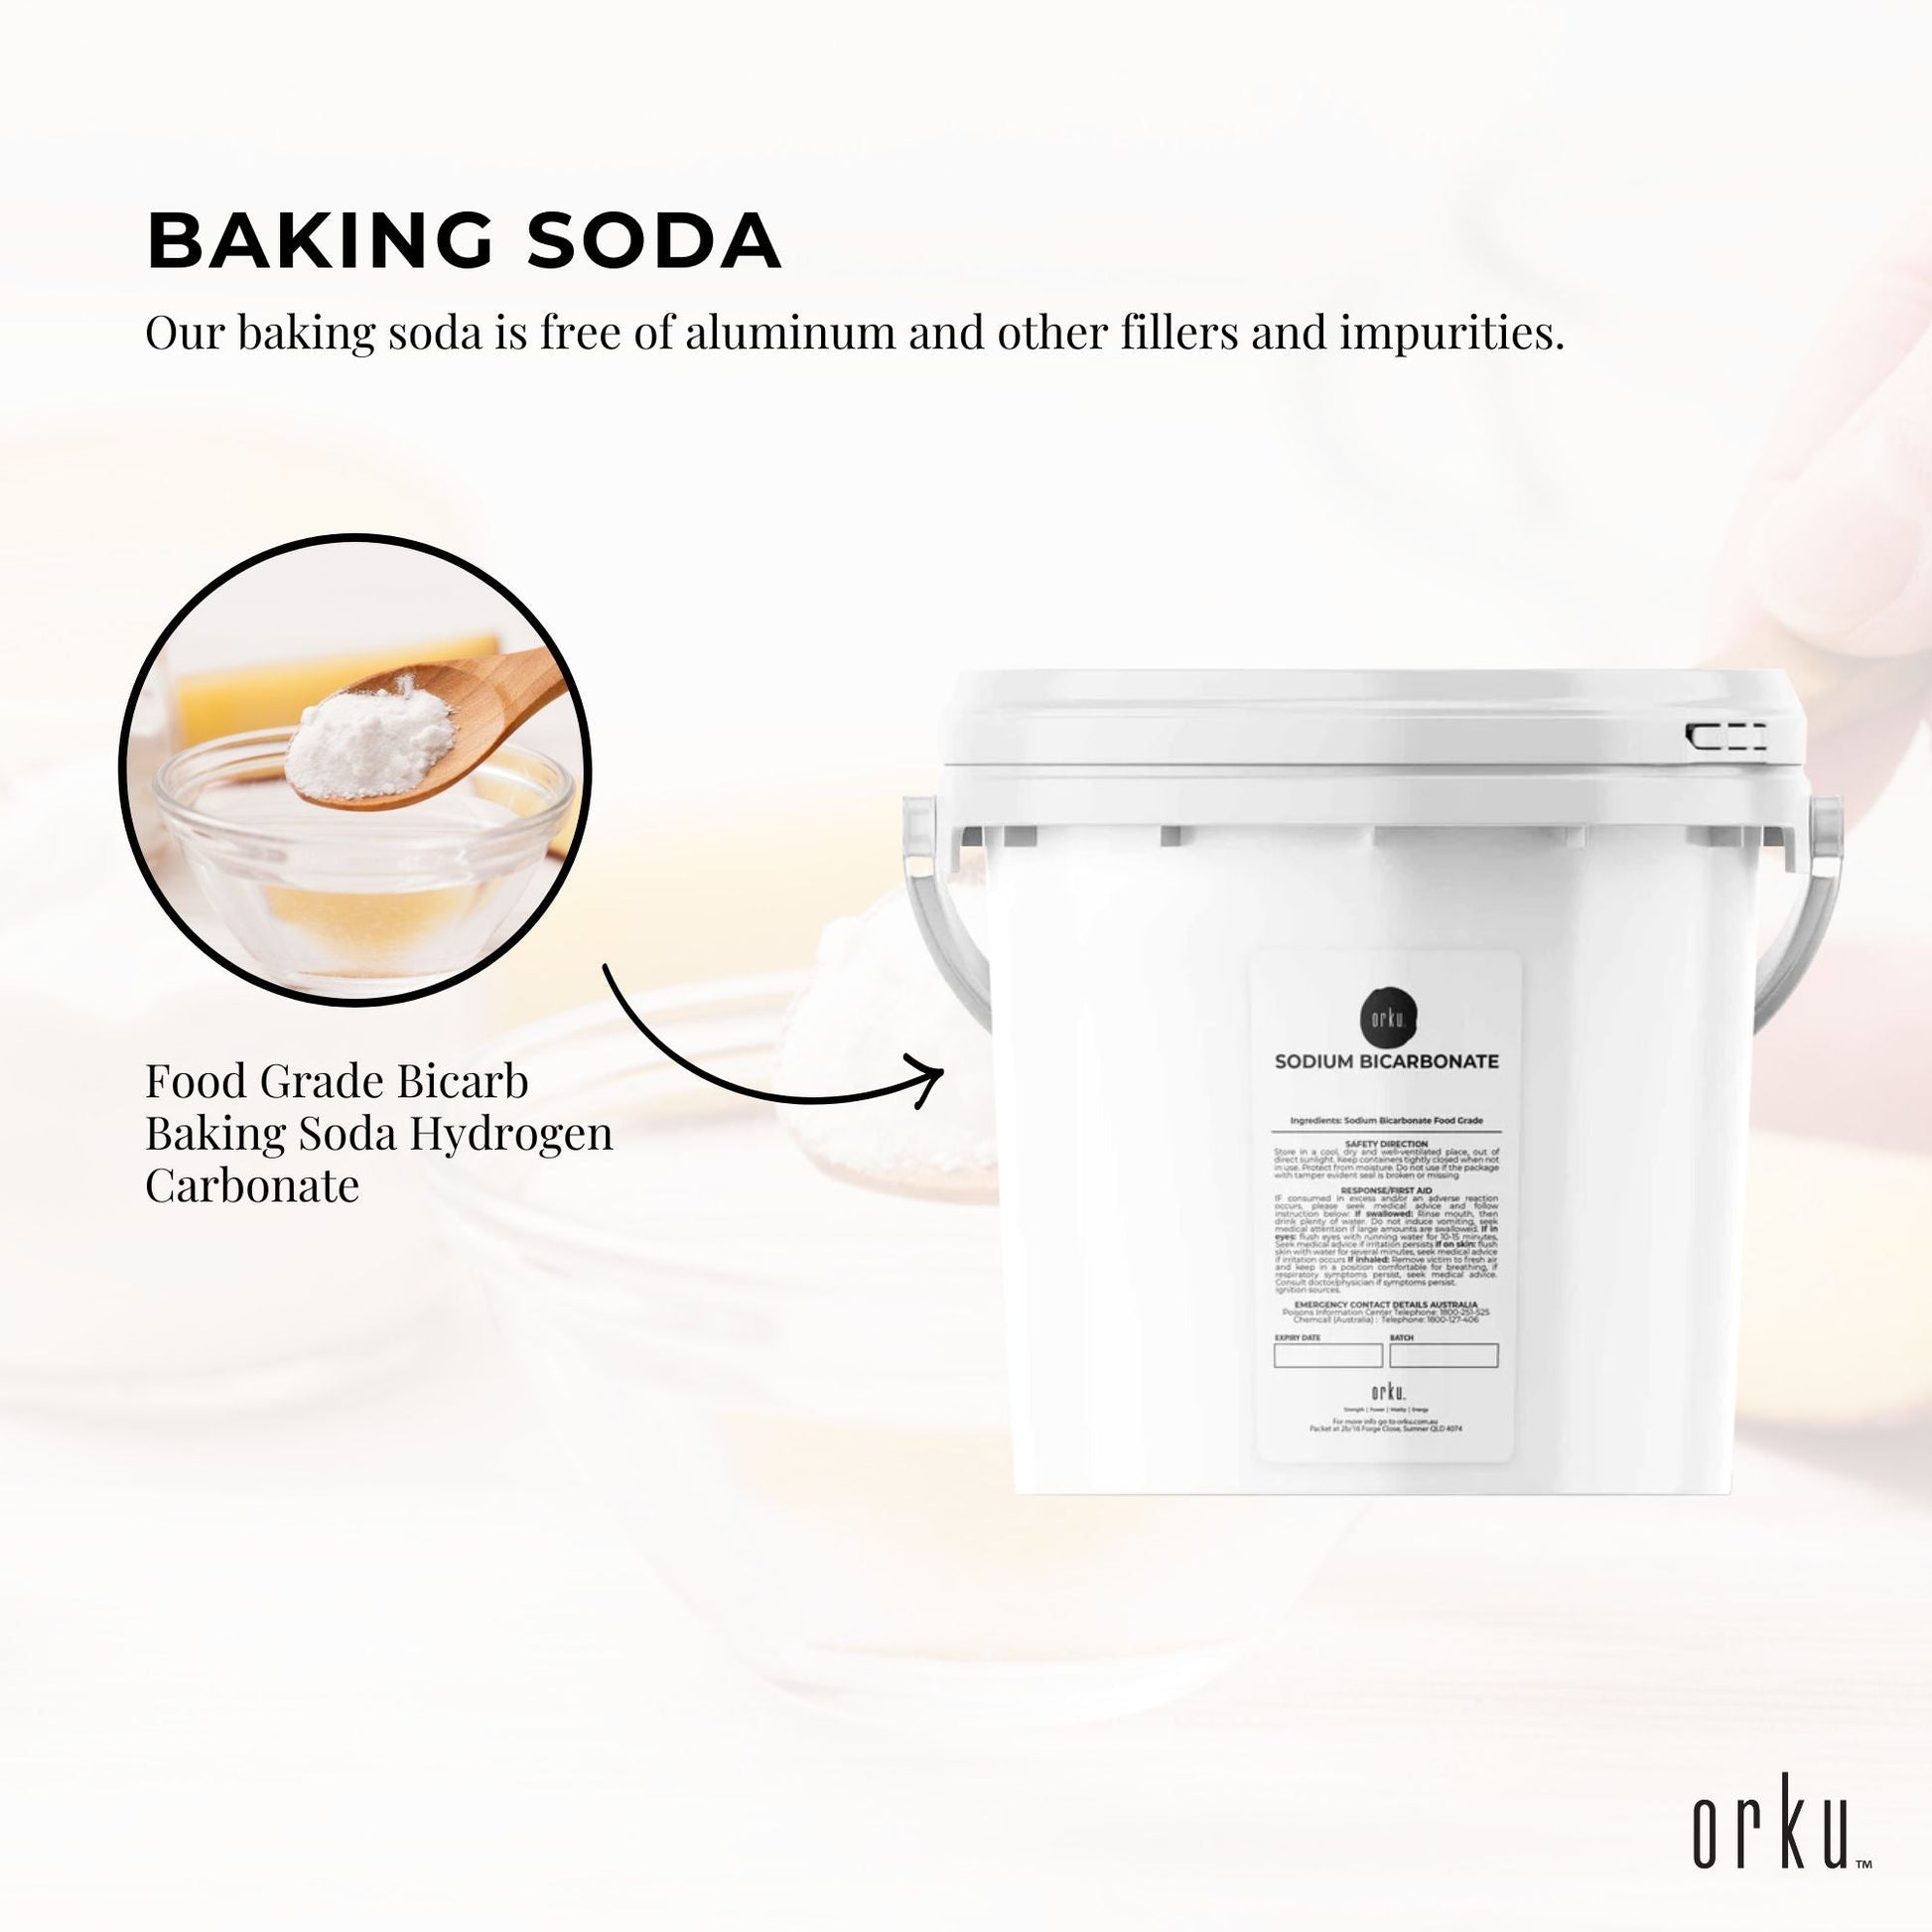 5Kg Sodium Bicarbonate Tub - Food Grade Bicarb Baking Soda Hydrogen Carbonate